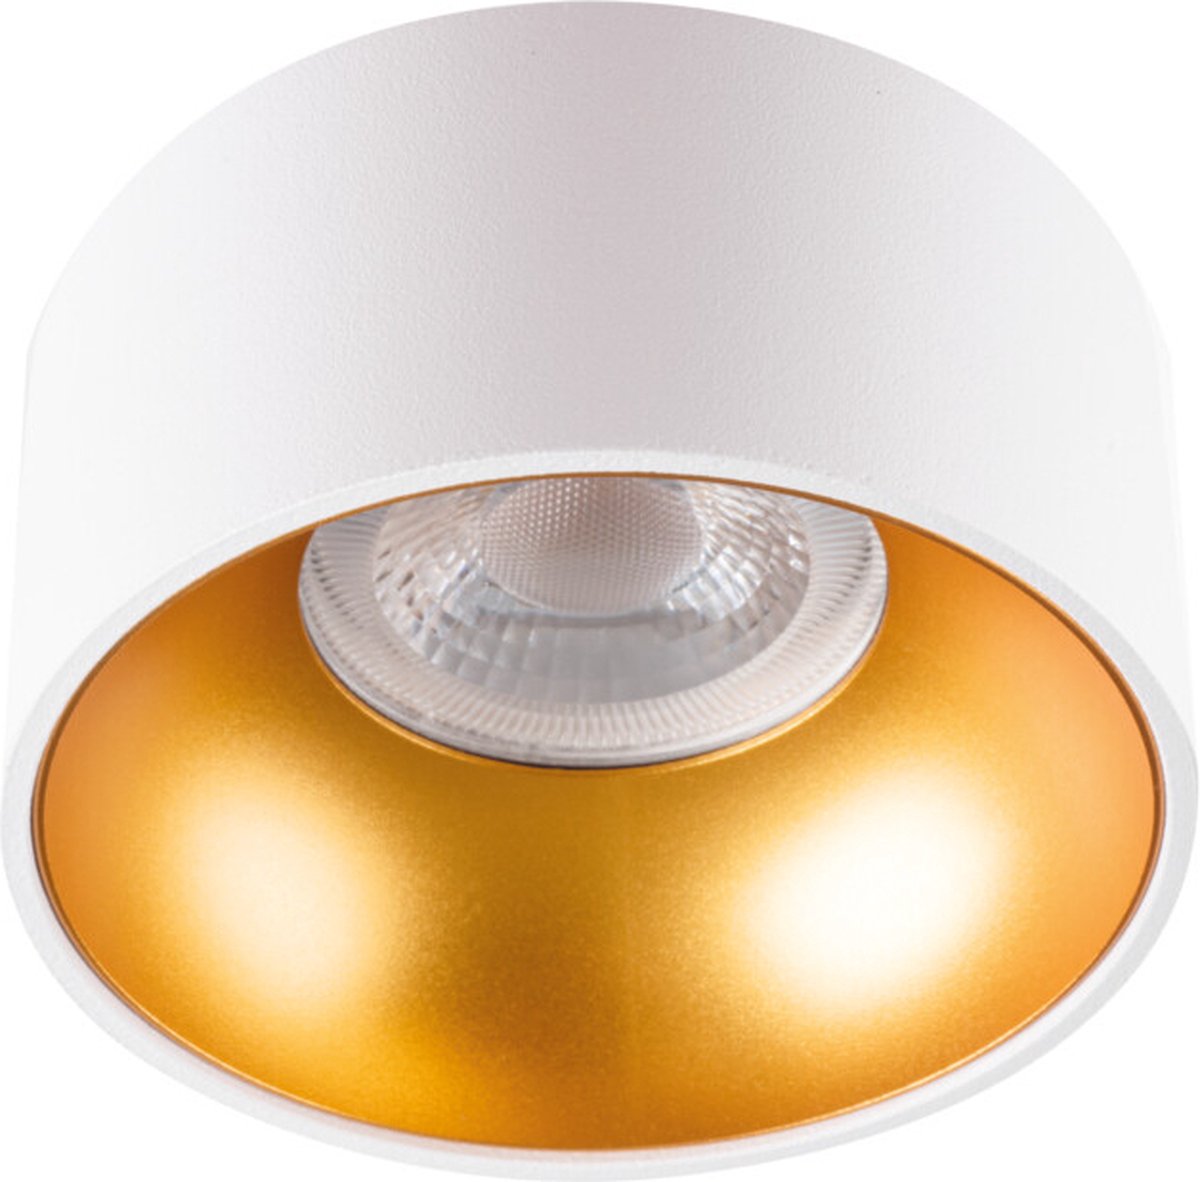 Kanlux S.A. - LED GU10 plafondspot wit goud rond - Enkelvoudig voor 1 LED GU10 spot